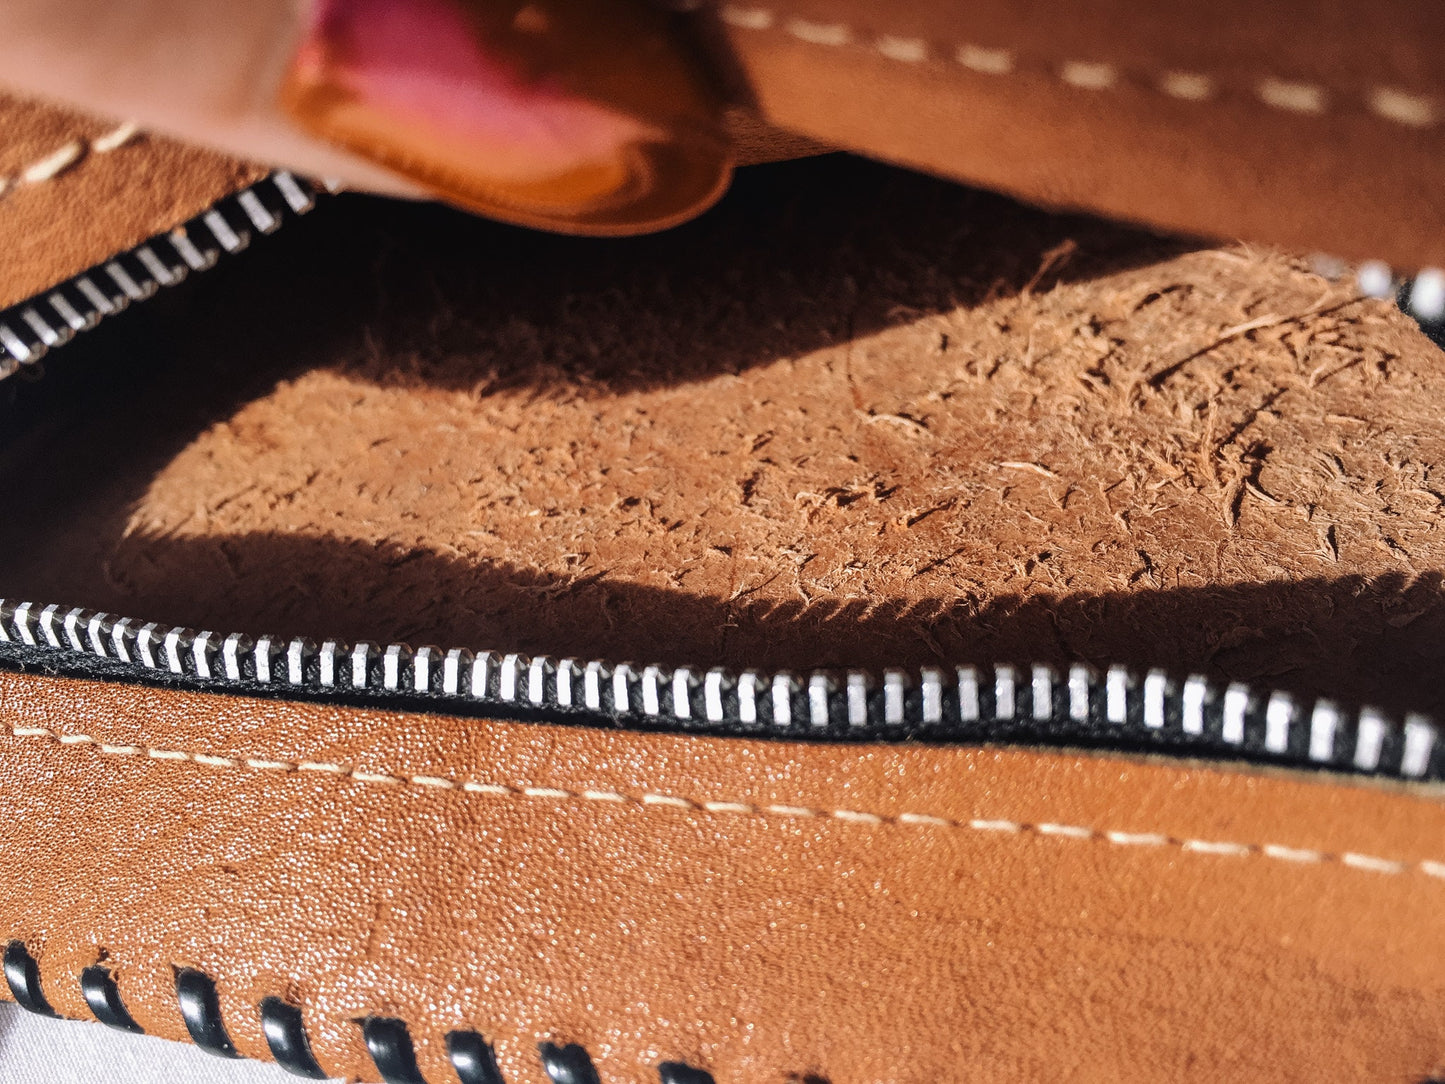 Handcrafted Vintage Brown "Peru" Engraved Tooled Leather Wristlet